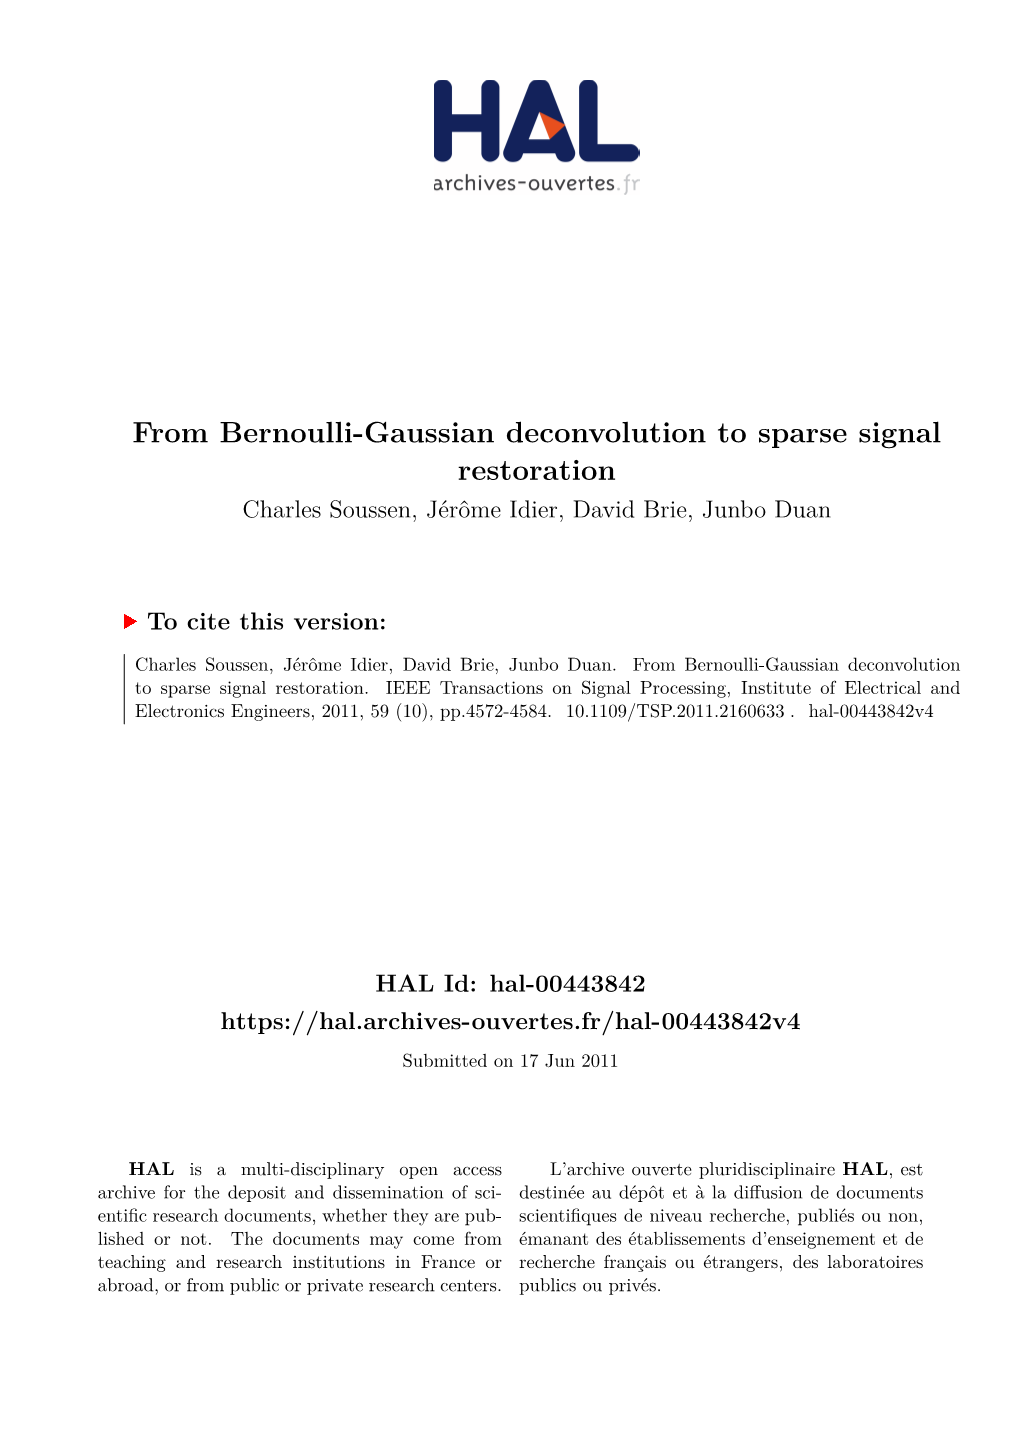 From Bernoulli-Gaussian Deconvolution to Sparse Signal Restoration Charles Soussen, Jérôme Idier, David Brie, Junbo Duan